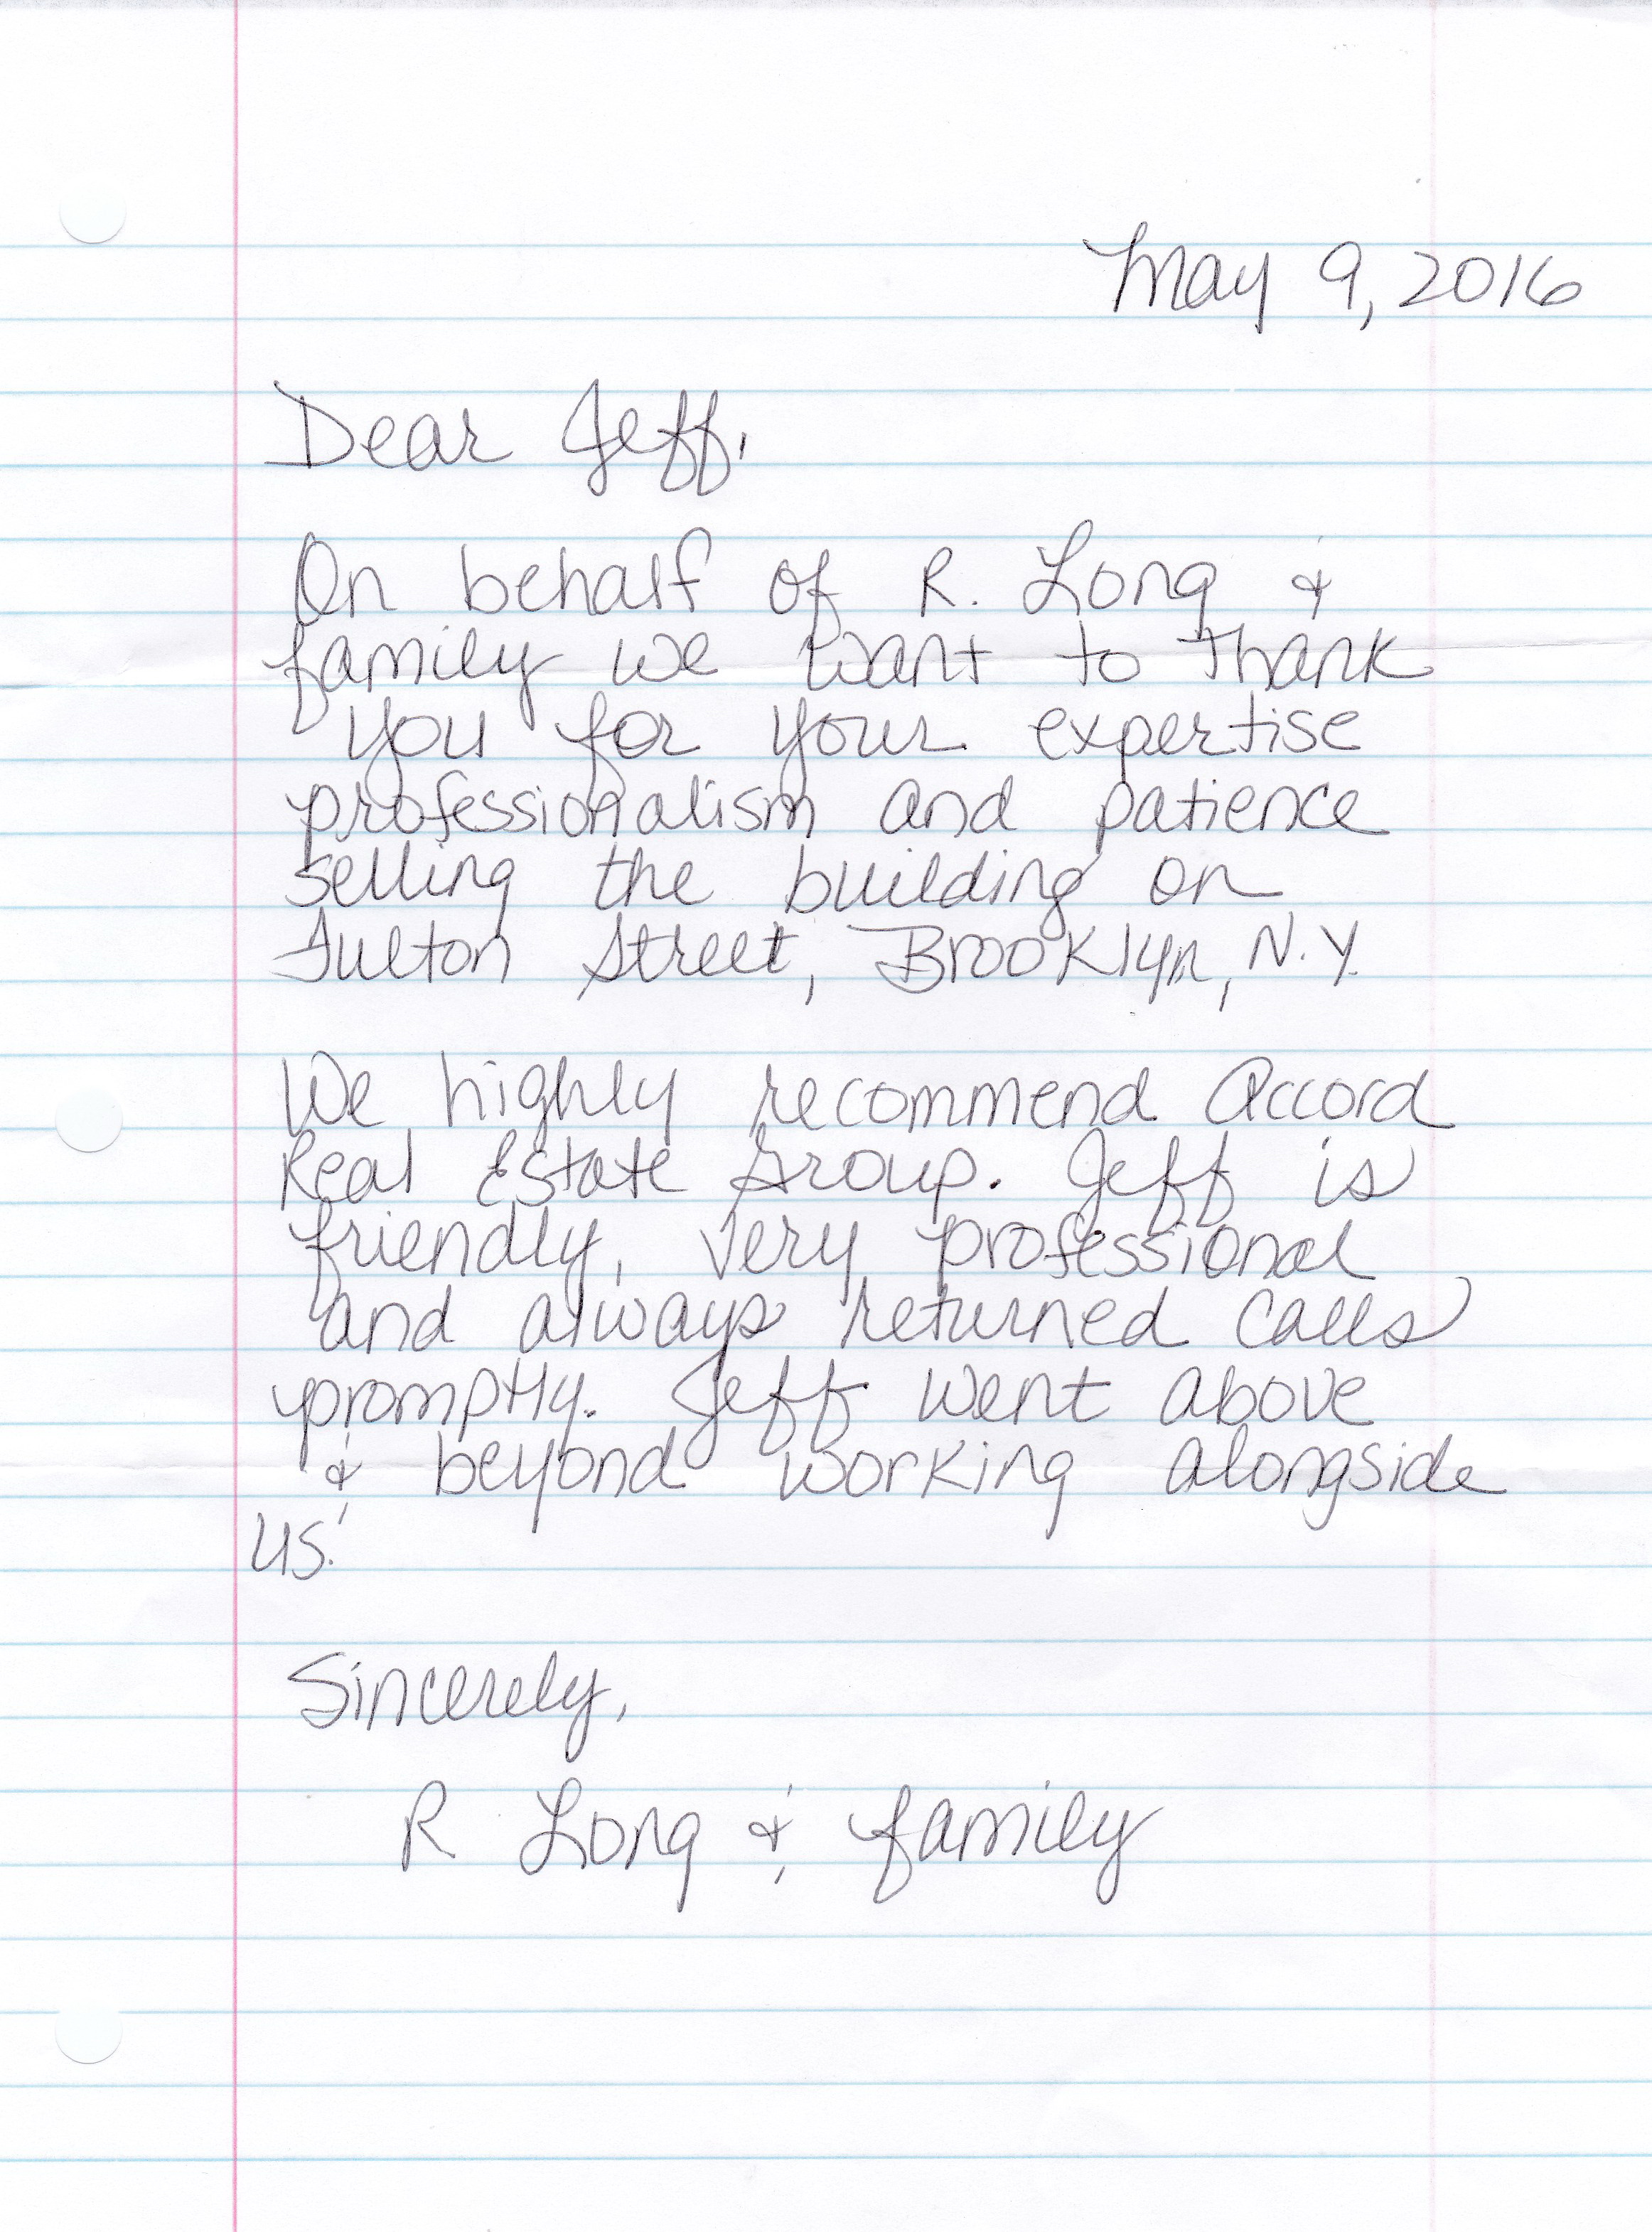 Testimonial Letter - Ronnie Long -050916